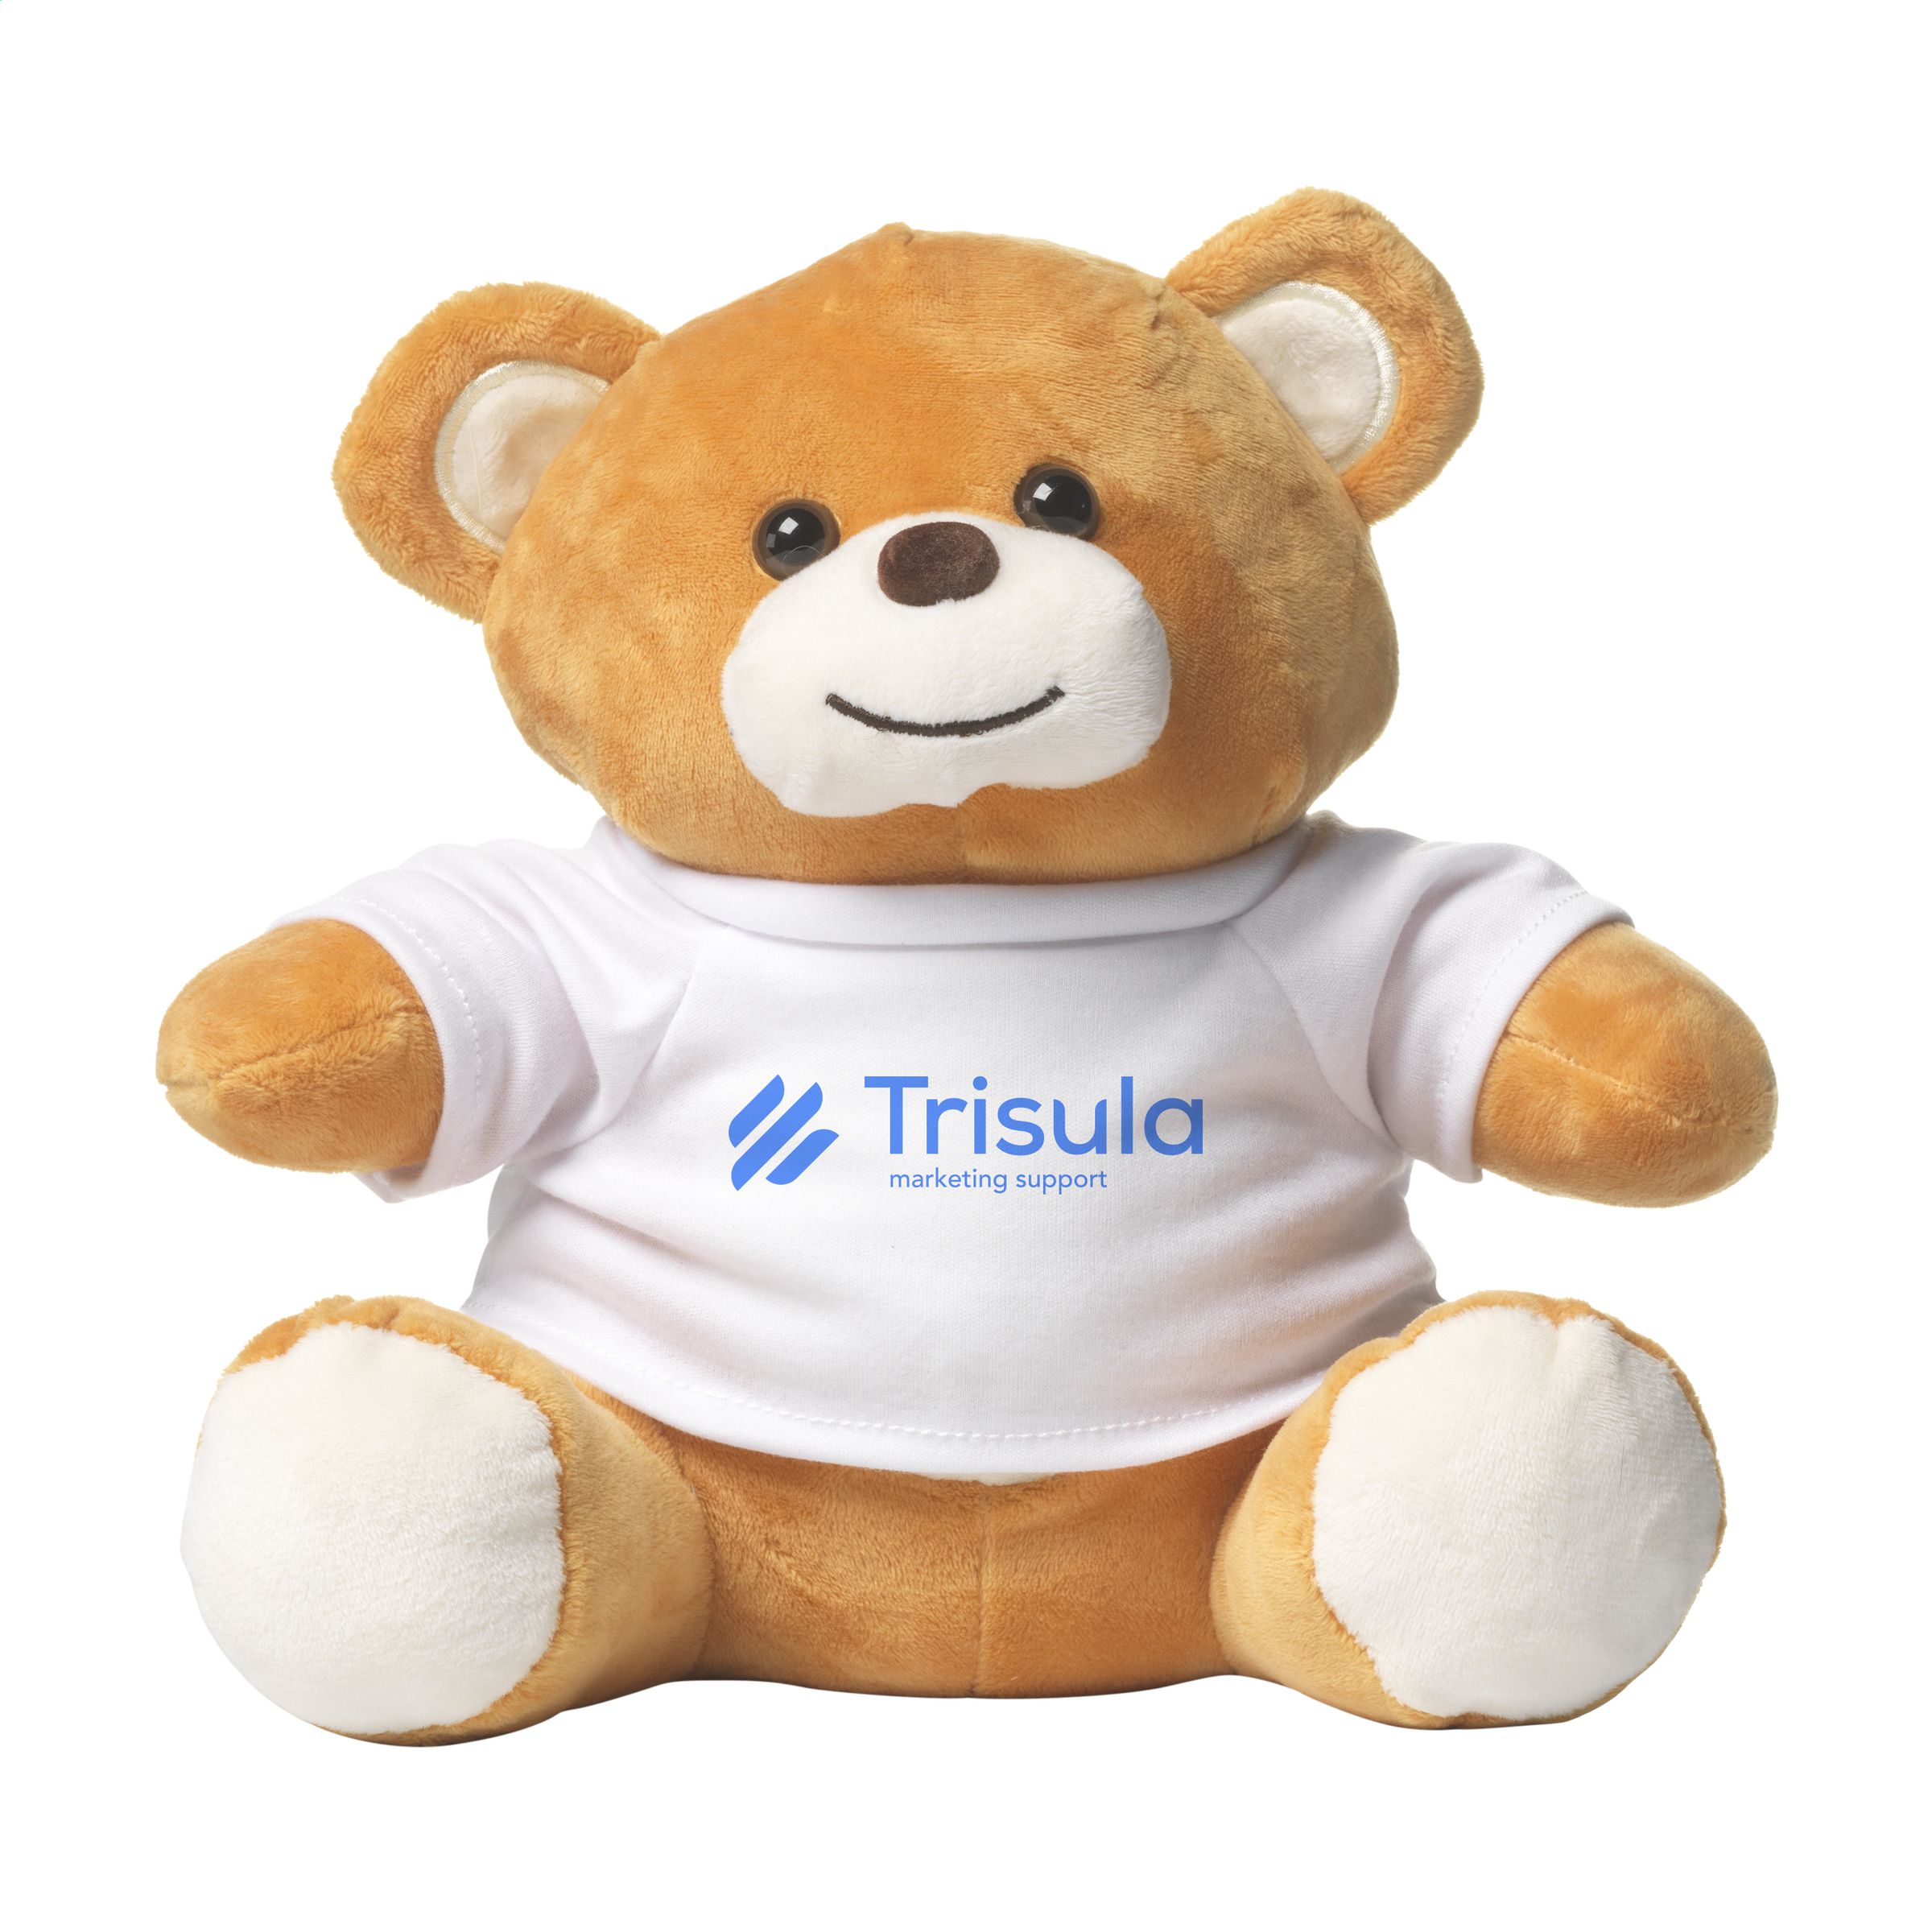 Soft Cuddly Teddy Bear with White T-Shirt - Halsall